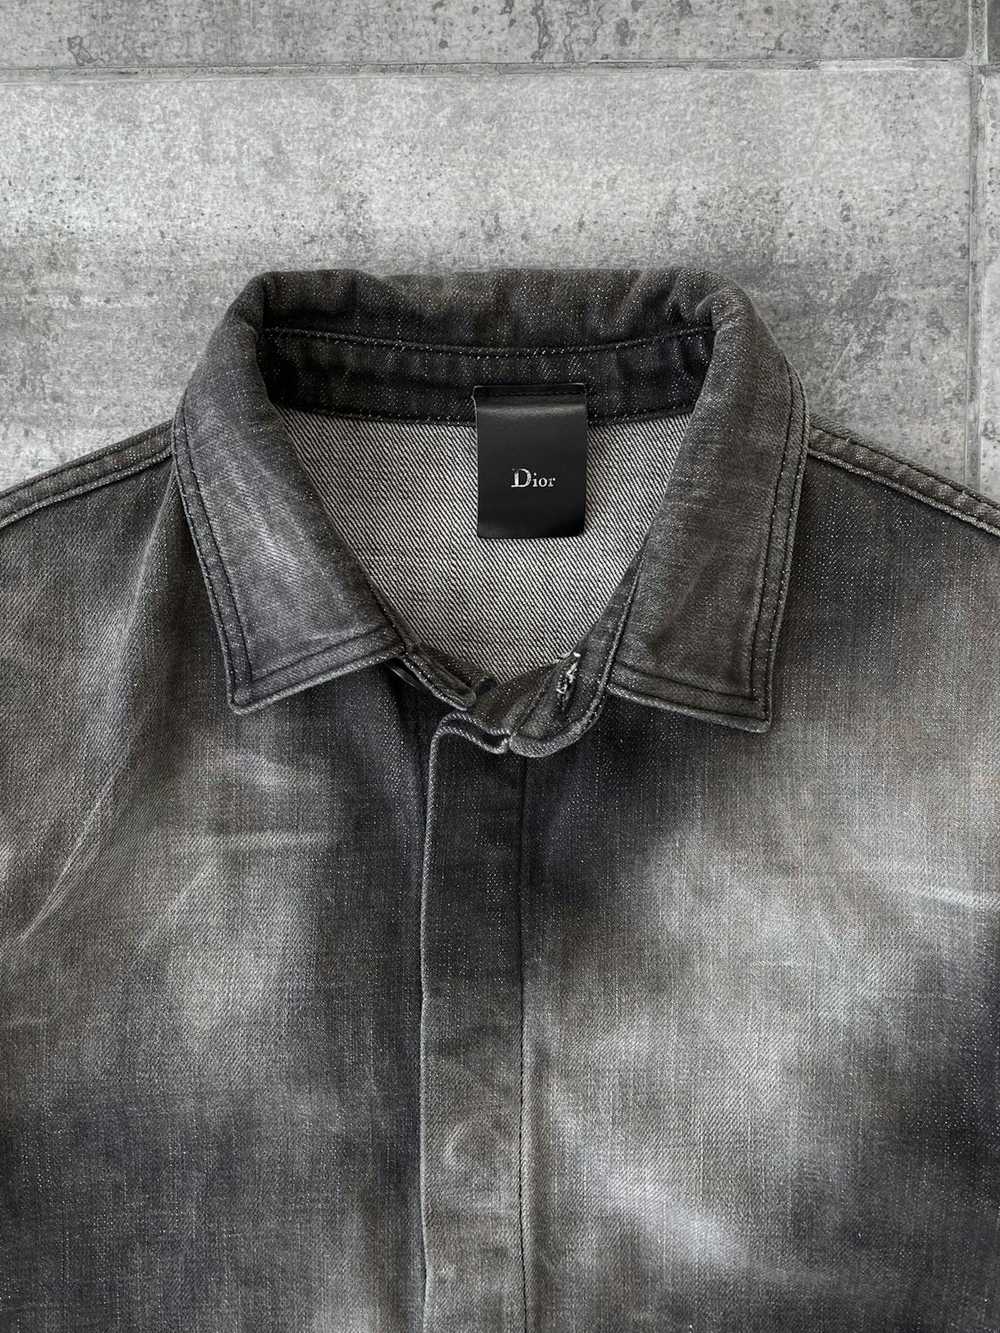 Dior SS2003 “Follow Me” faded denim jacket - image 3